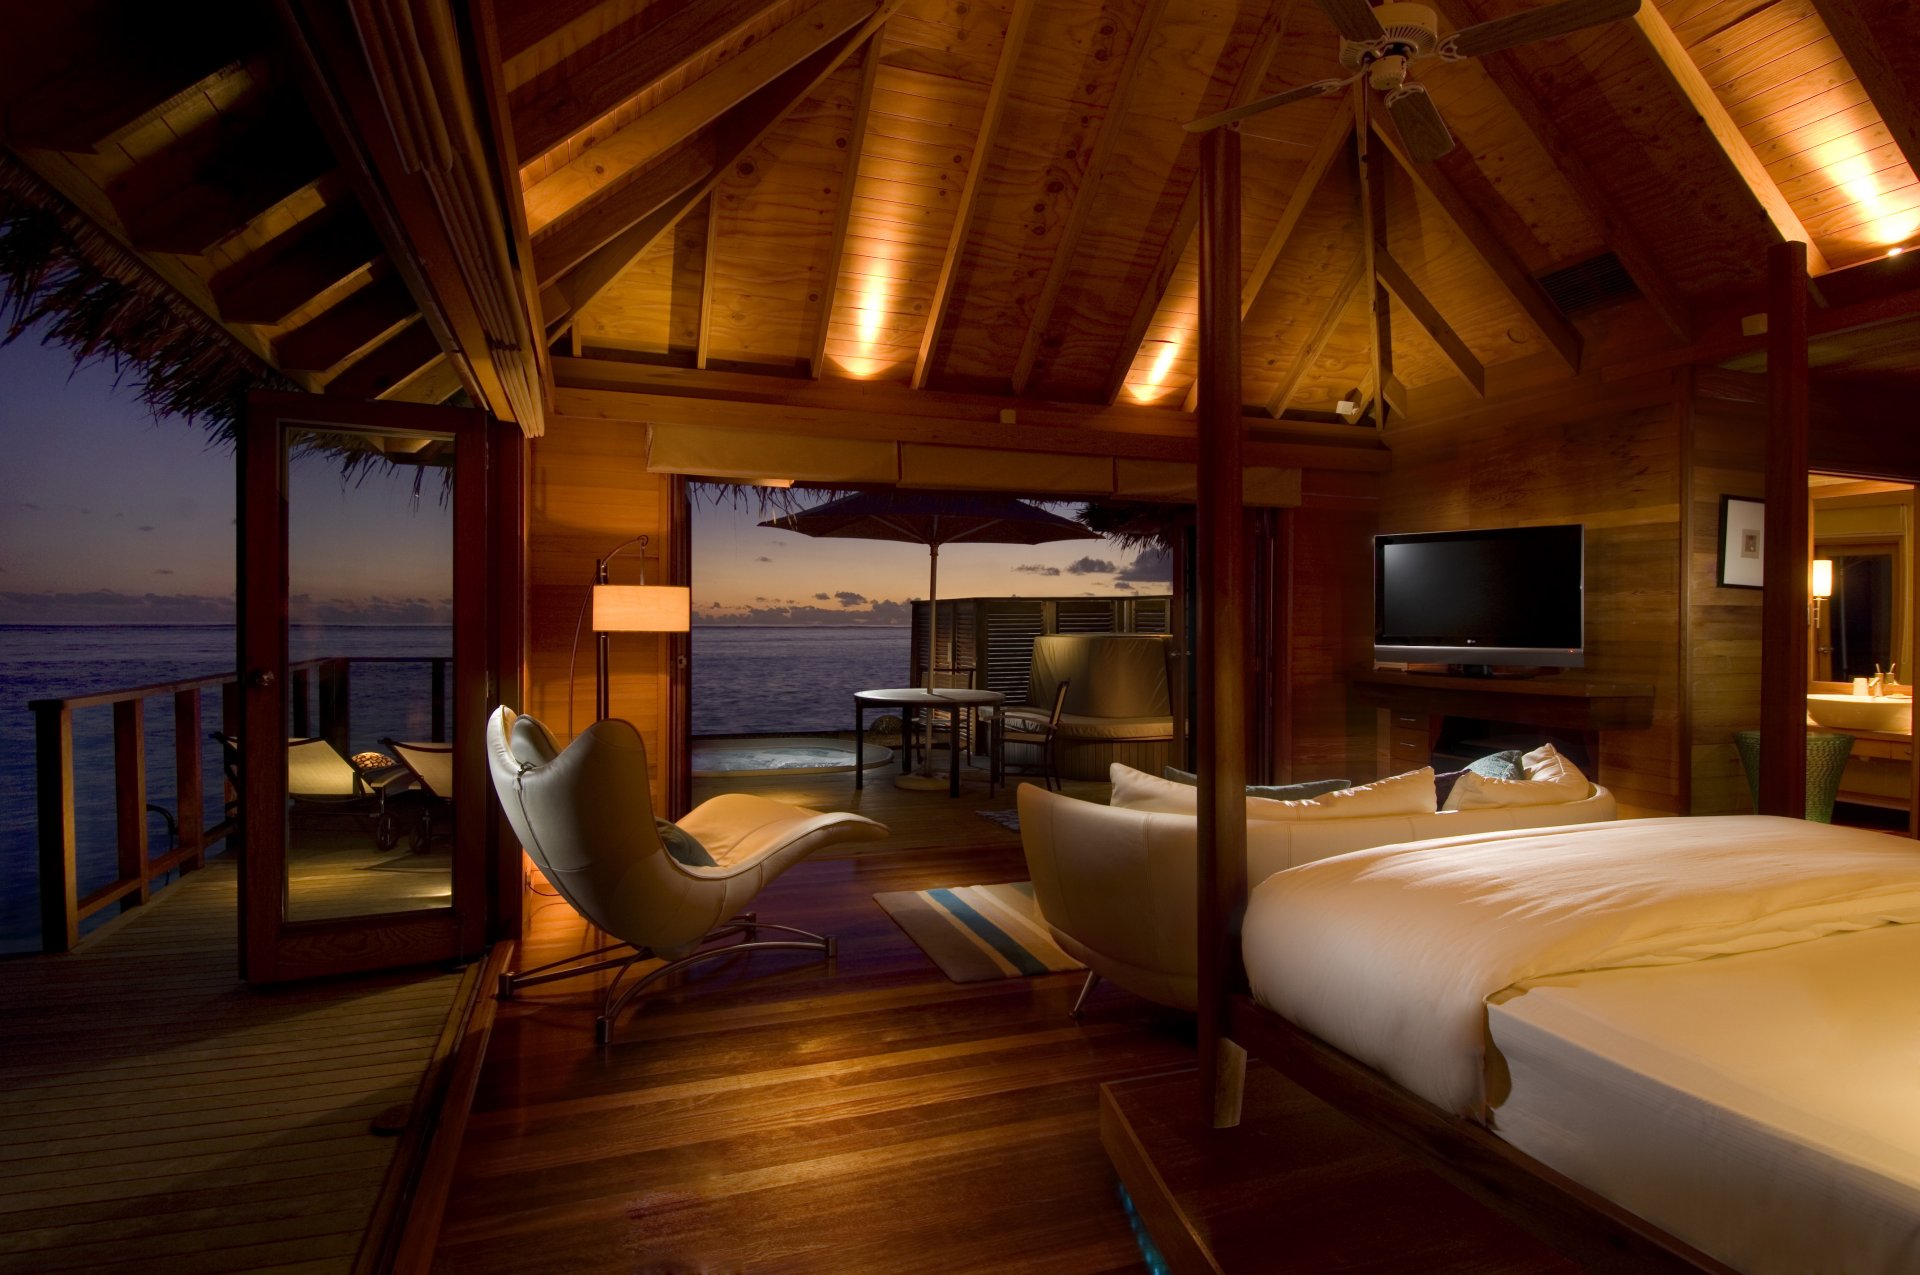 interior bungalow dormitorio cama sofá sillón tv tumbonas jacuzzi iluminación mar